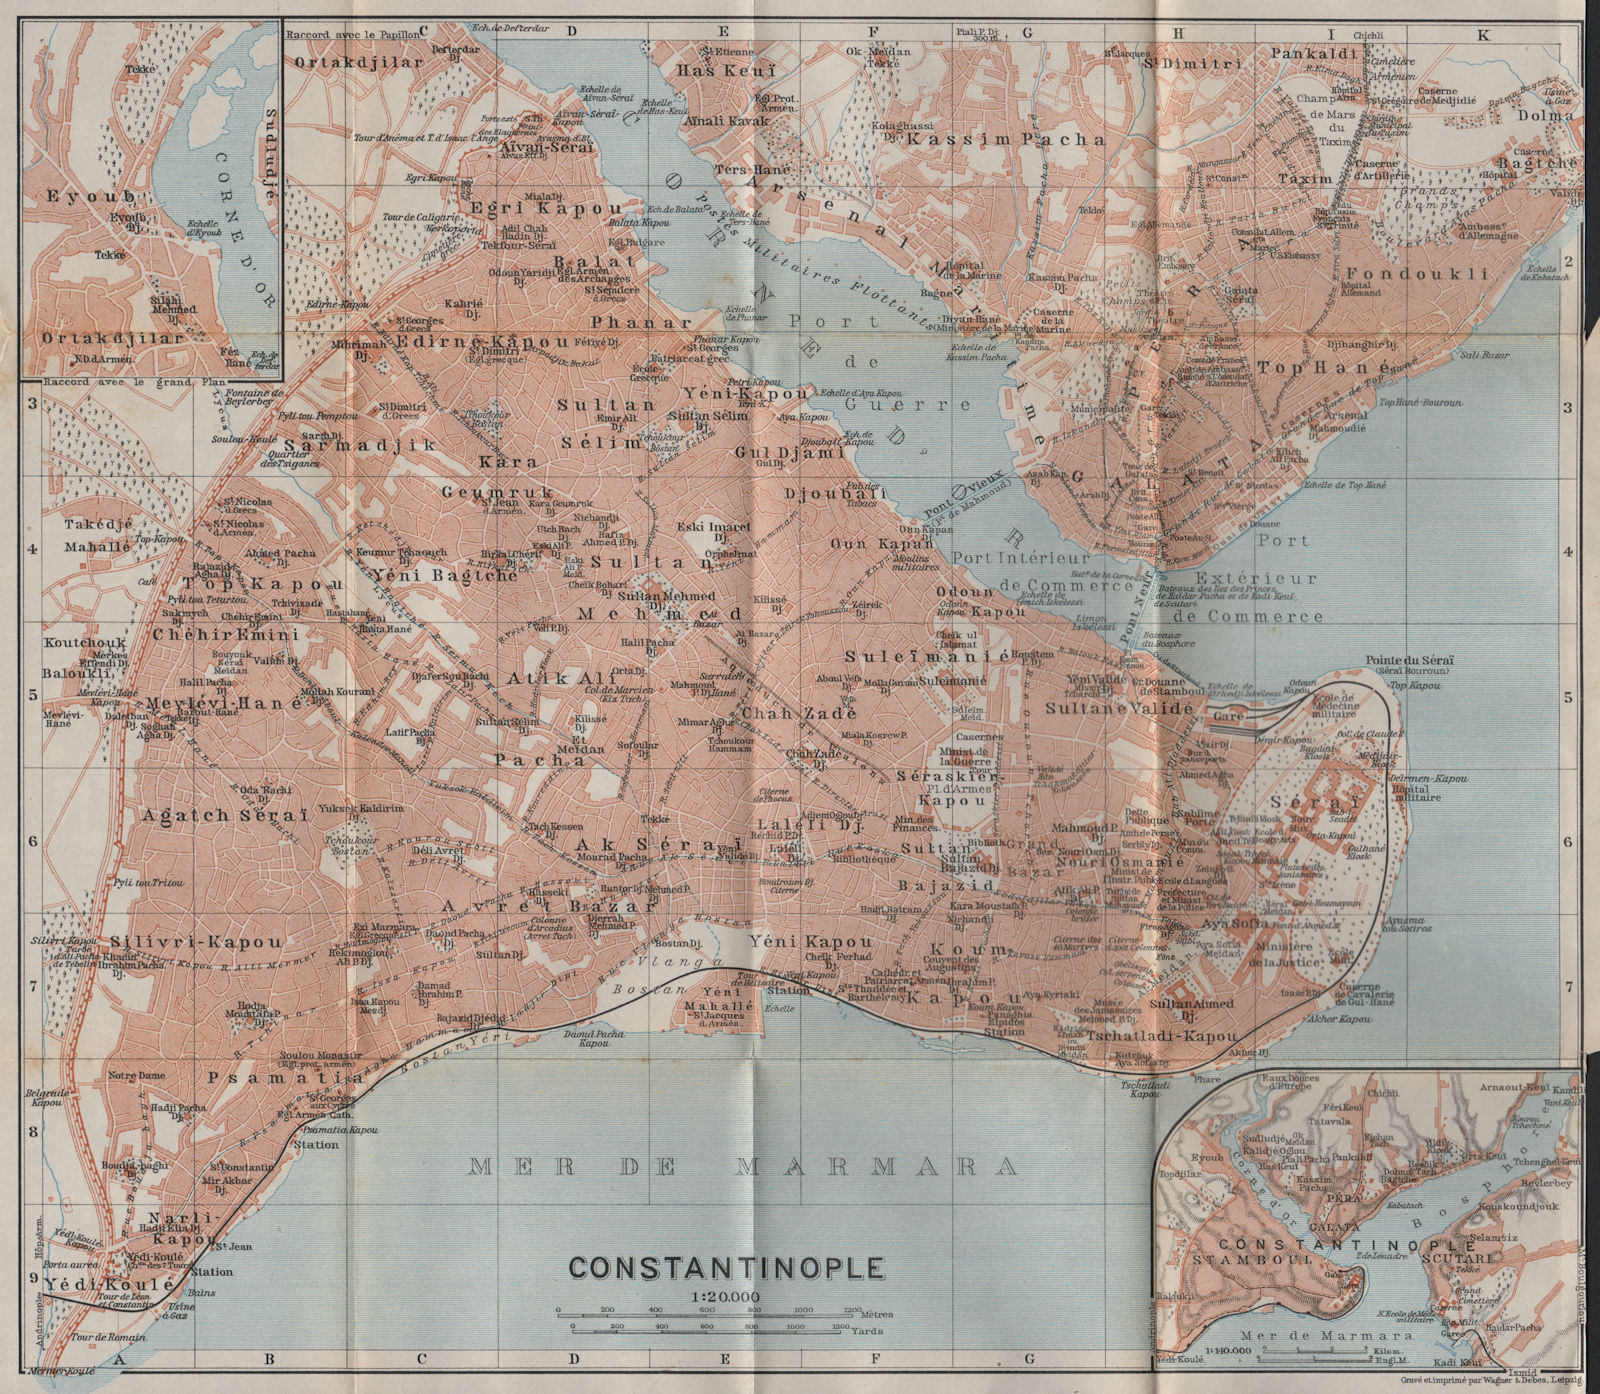 CONSTANTINOPLE / ISTANBUL town city plan. Galata Golden Horn. Turkey 1911 map